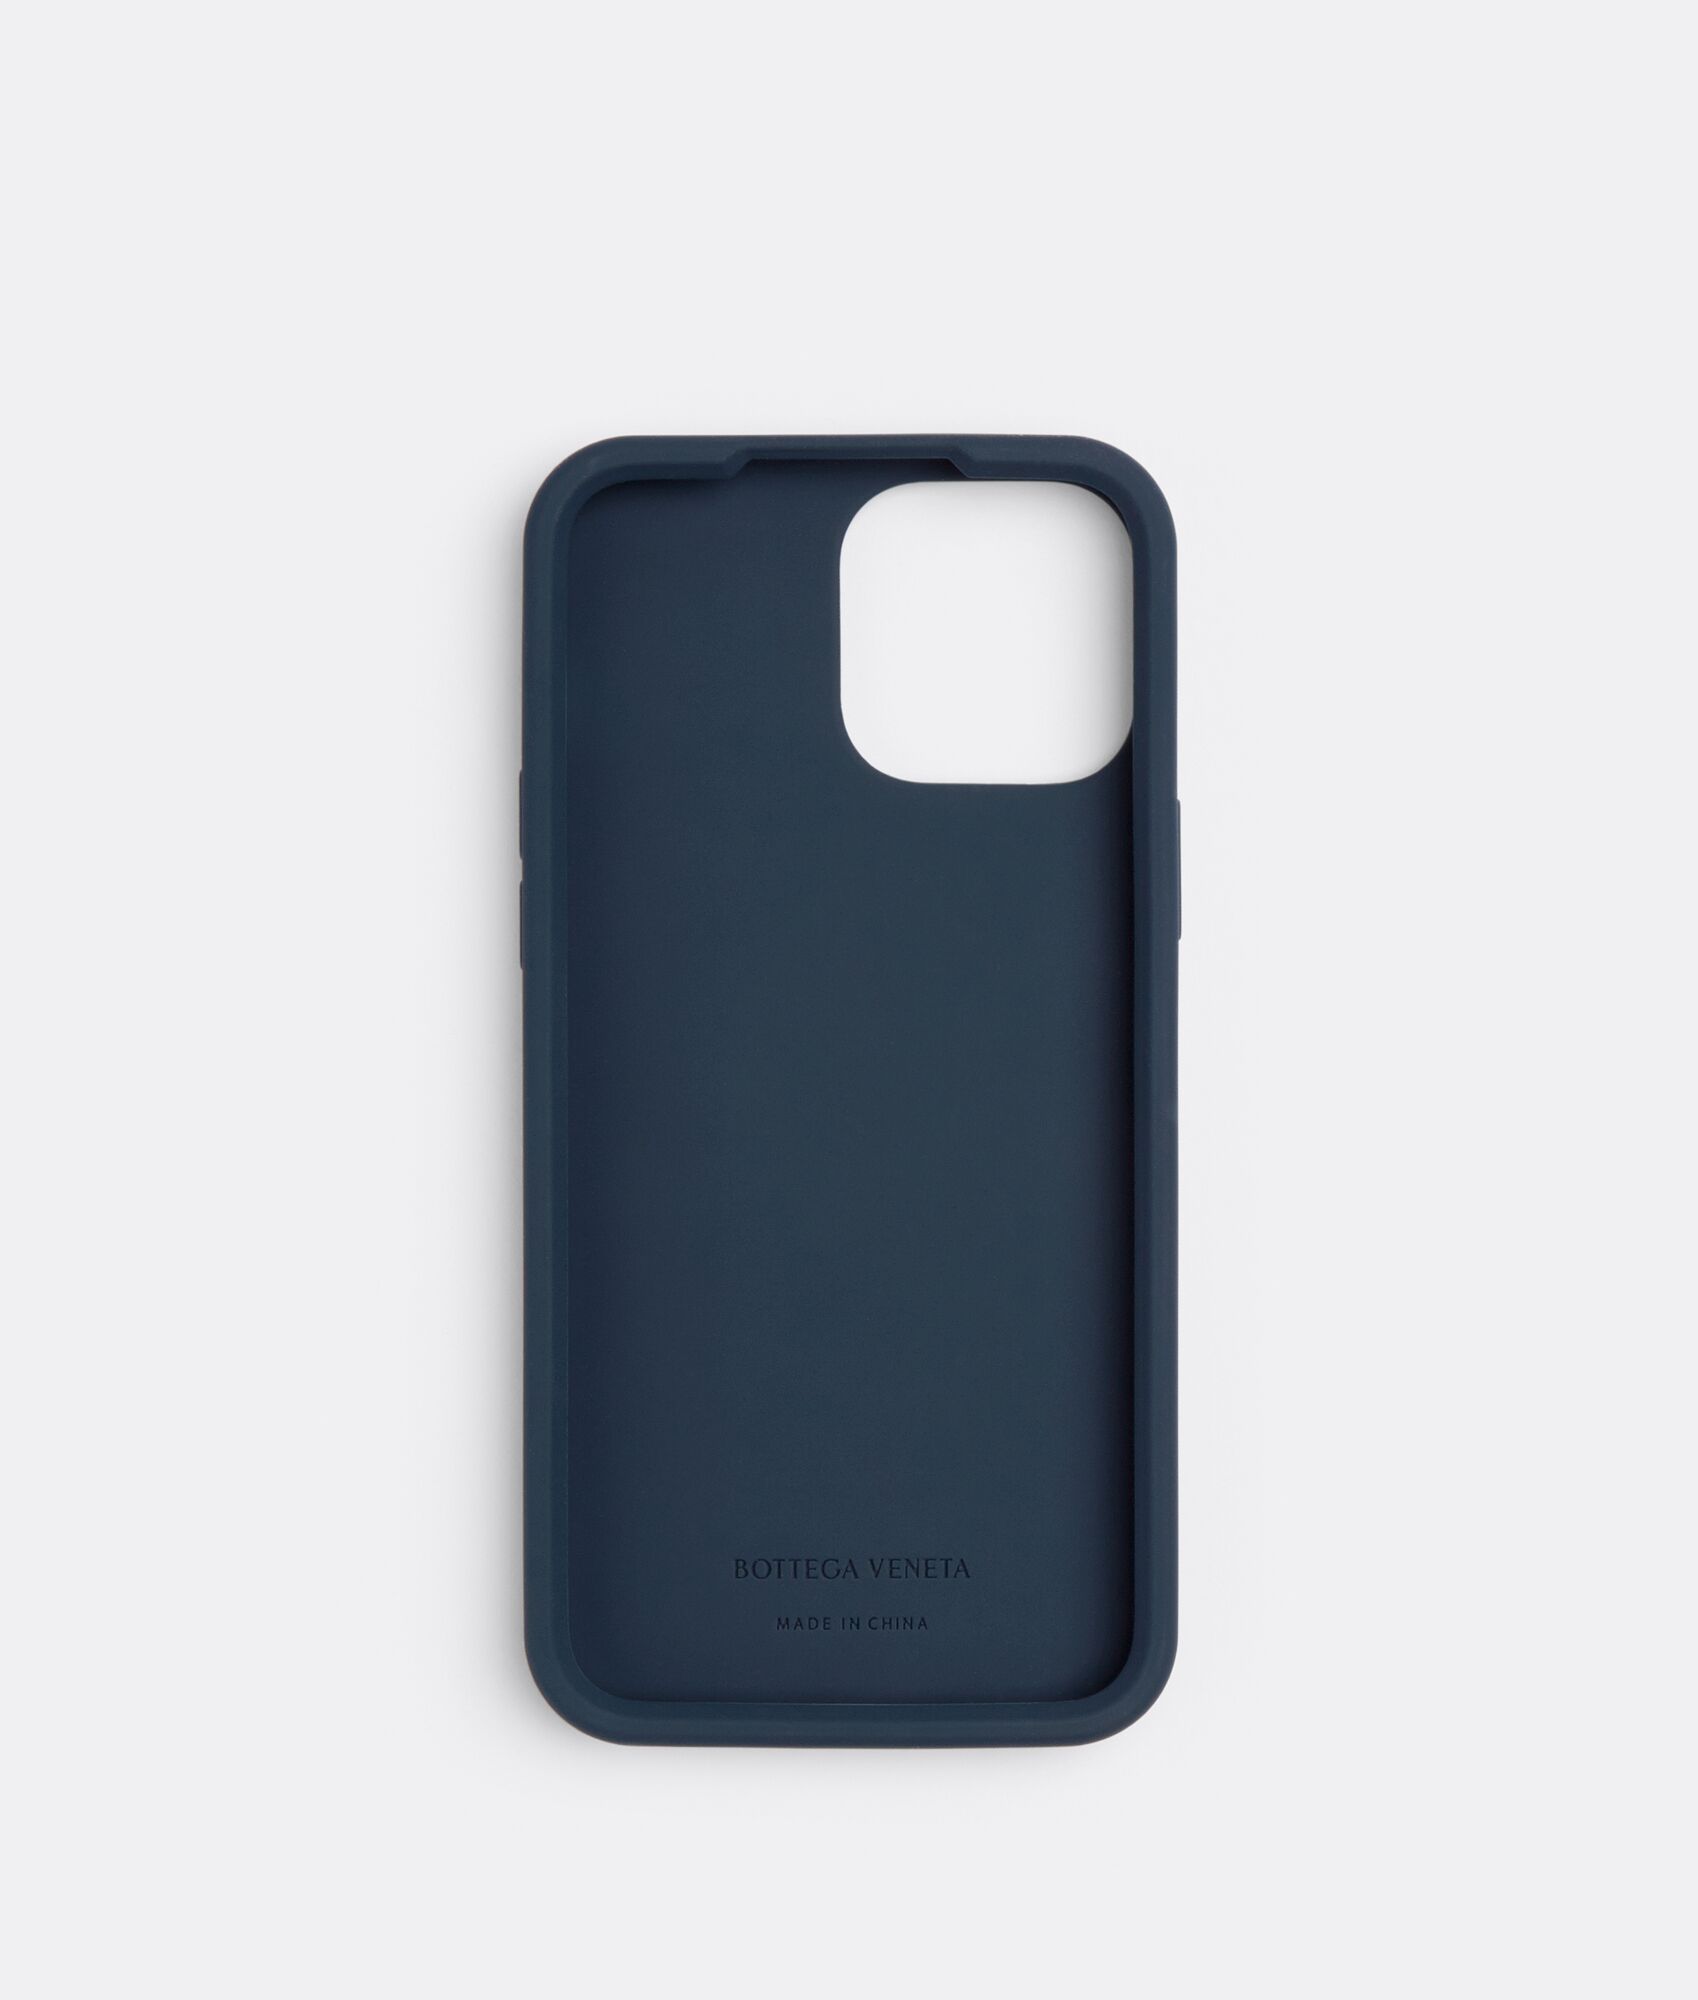 Bottega Veneta® Men's Iphone 13 Pro Max Case in Deep Blue. Shop online now.